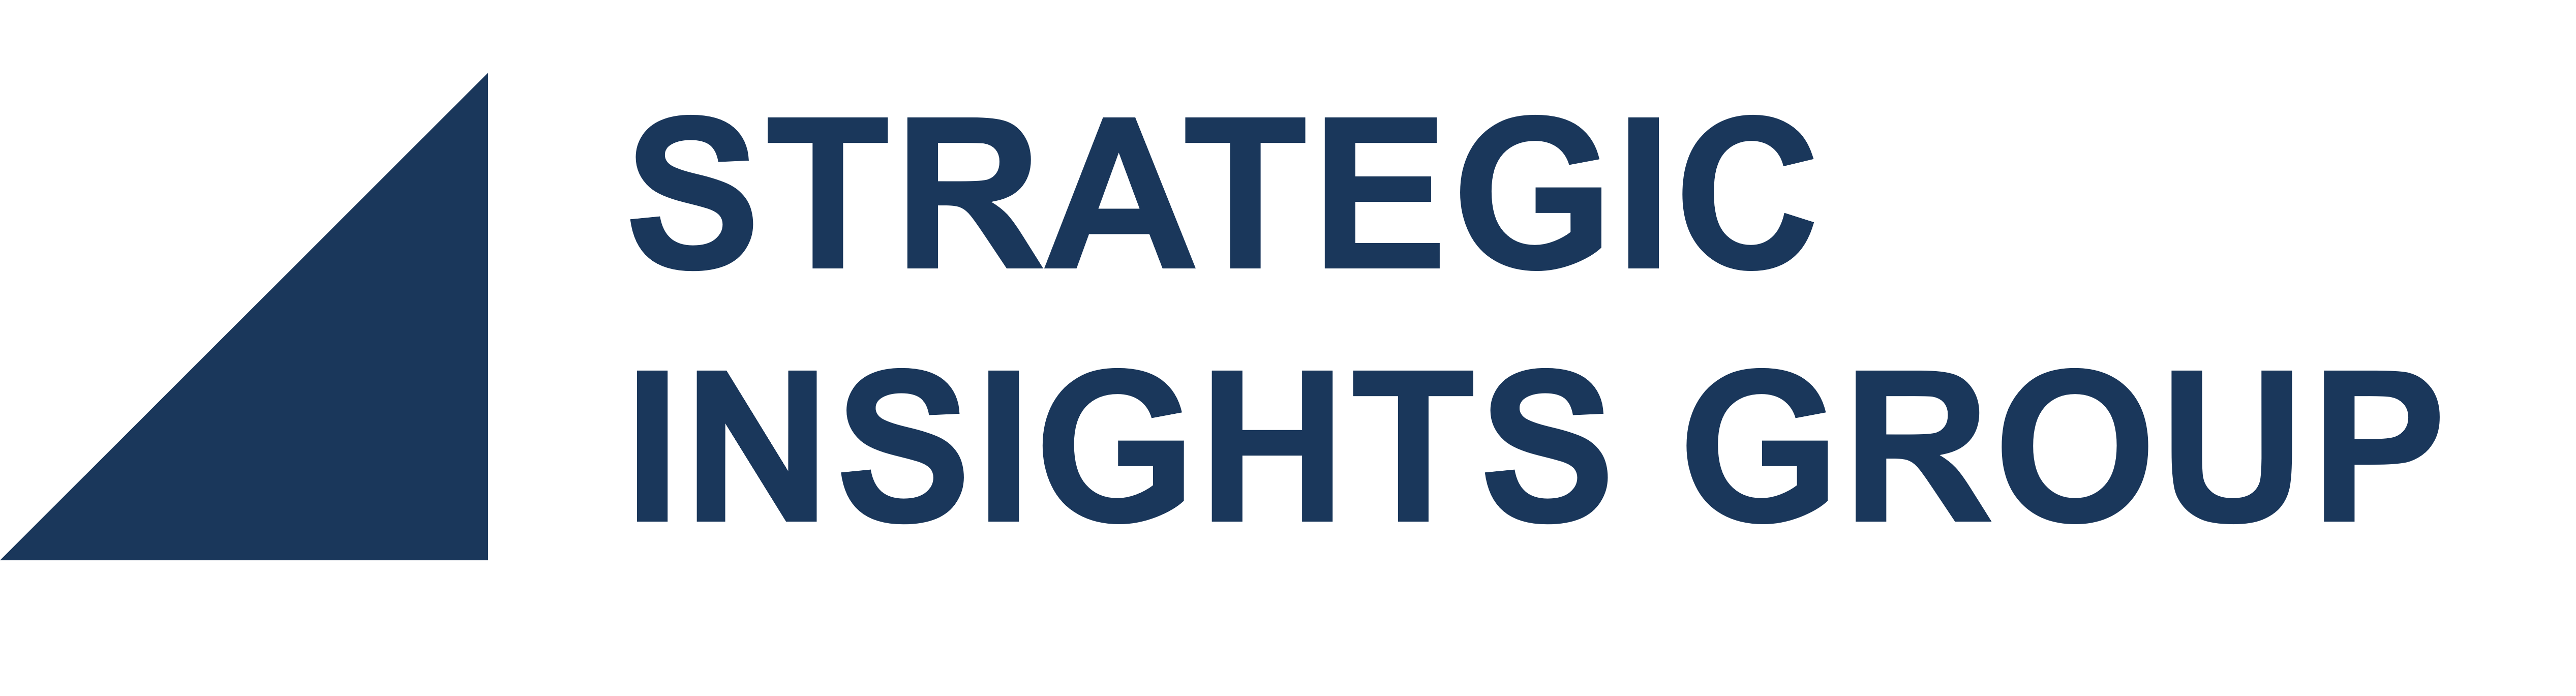 Strategic Insights Group